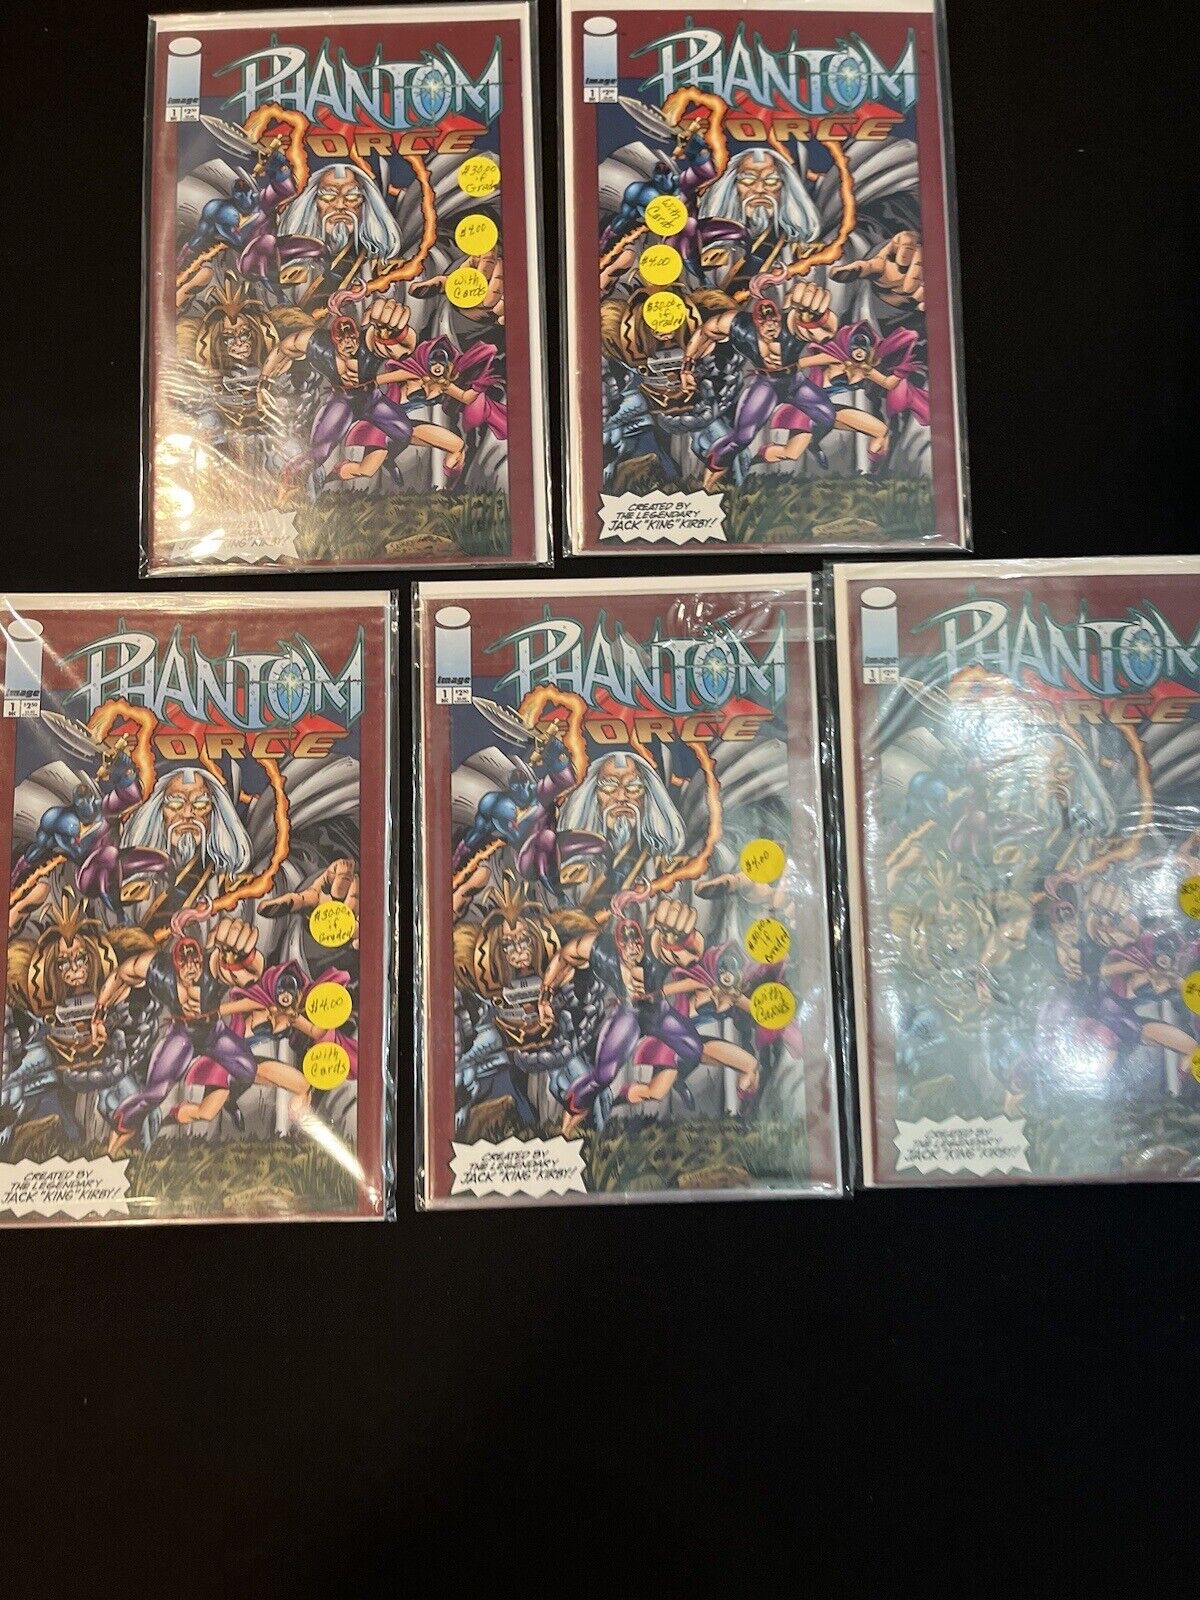 Phantom Force #1 Image Comics VF/NM ( 5 COPIES )